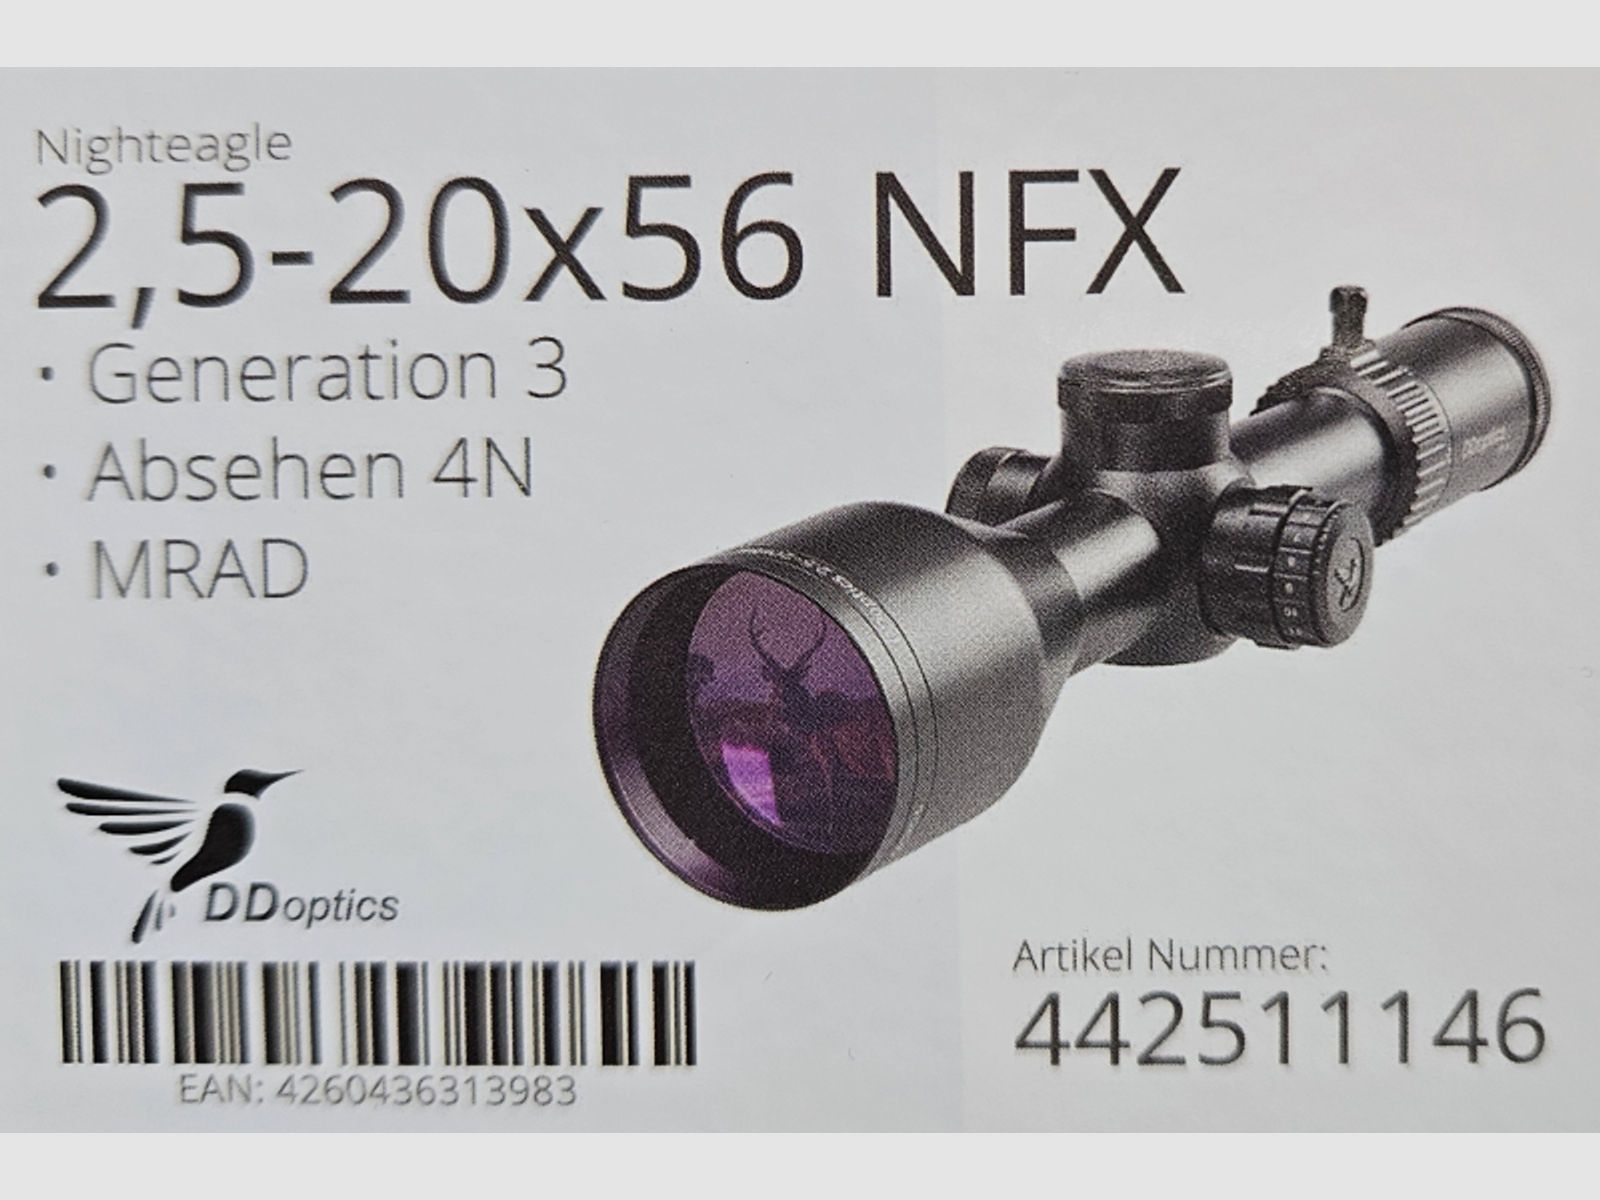 Neuware vom Fachhandel - DDoptics NFX V8 2,5-20x56 A4N Supershort - Neuheit!!!